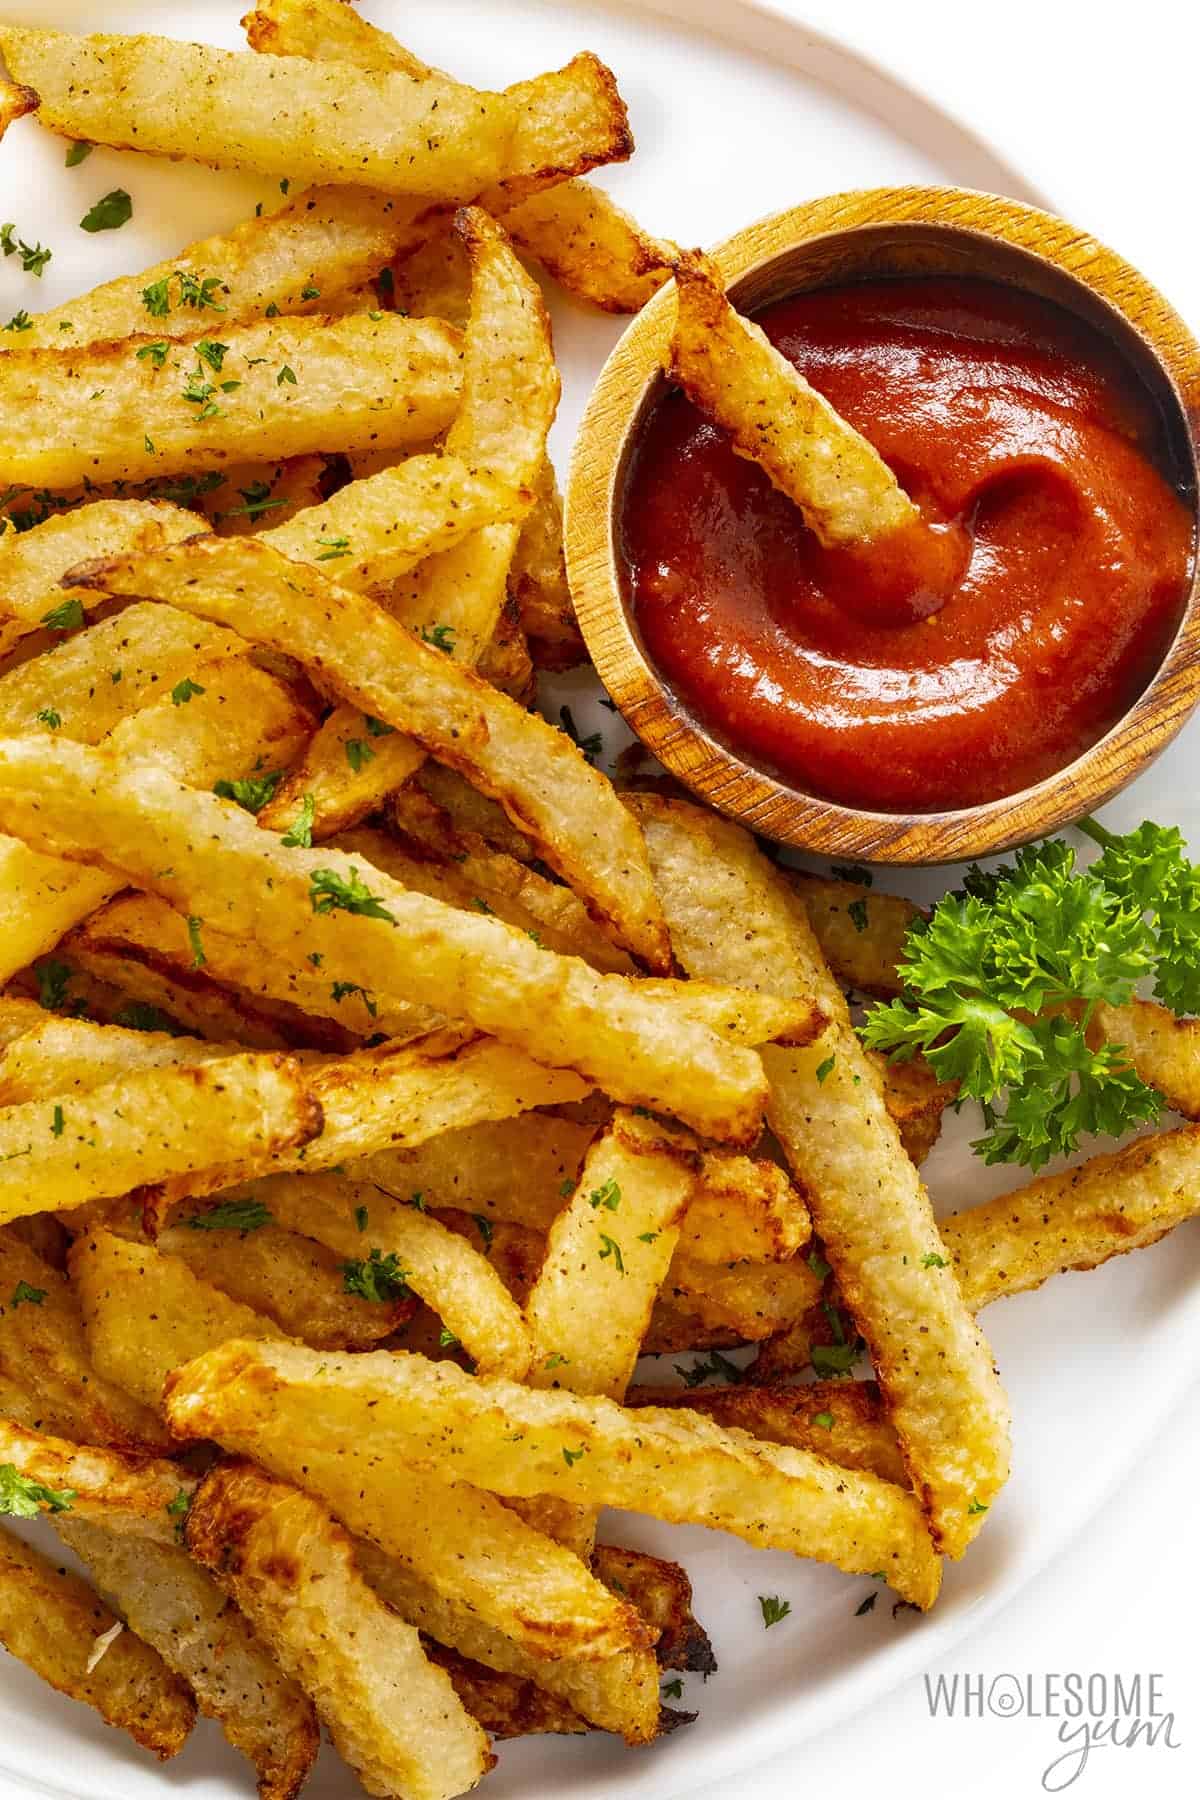 Jicama french fries on a plate.